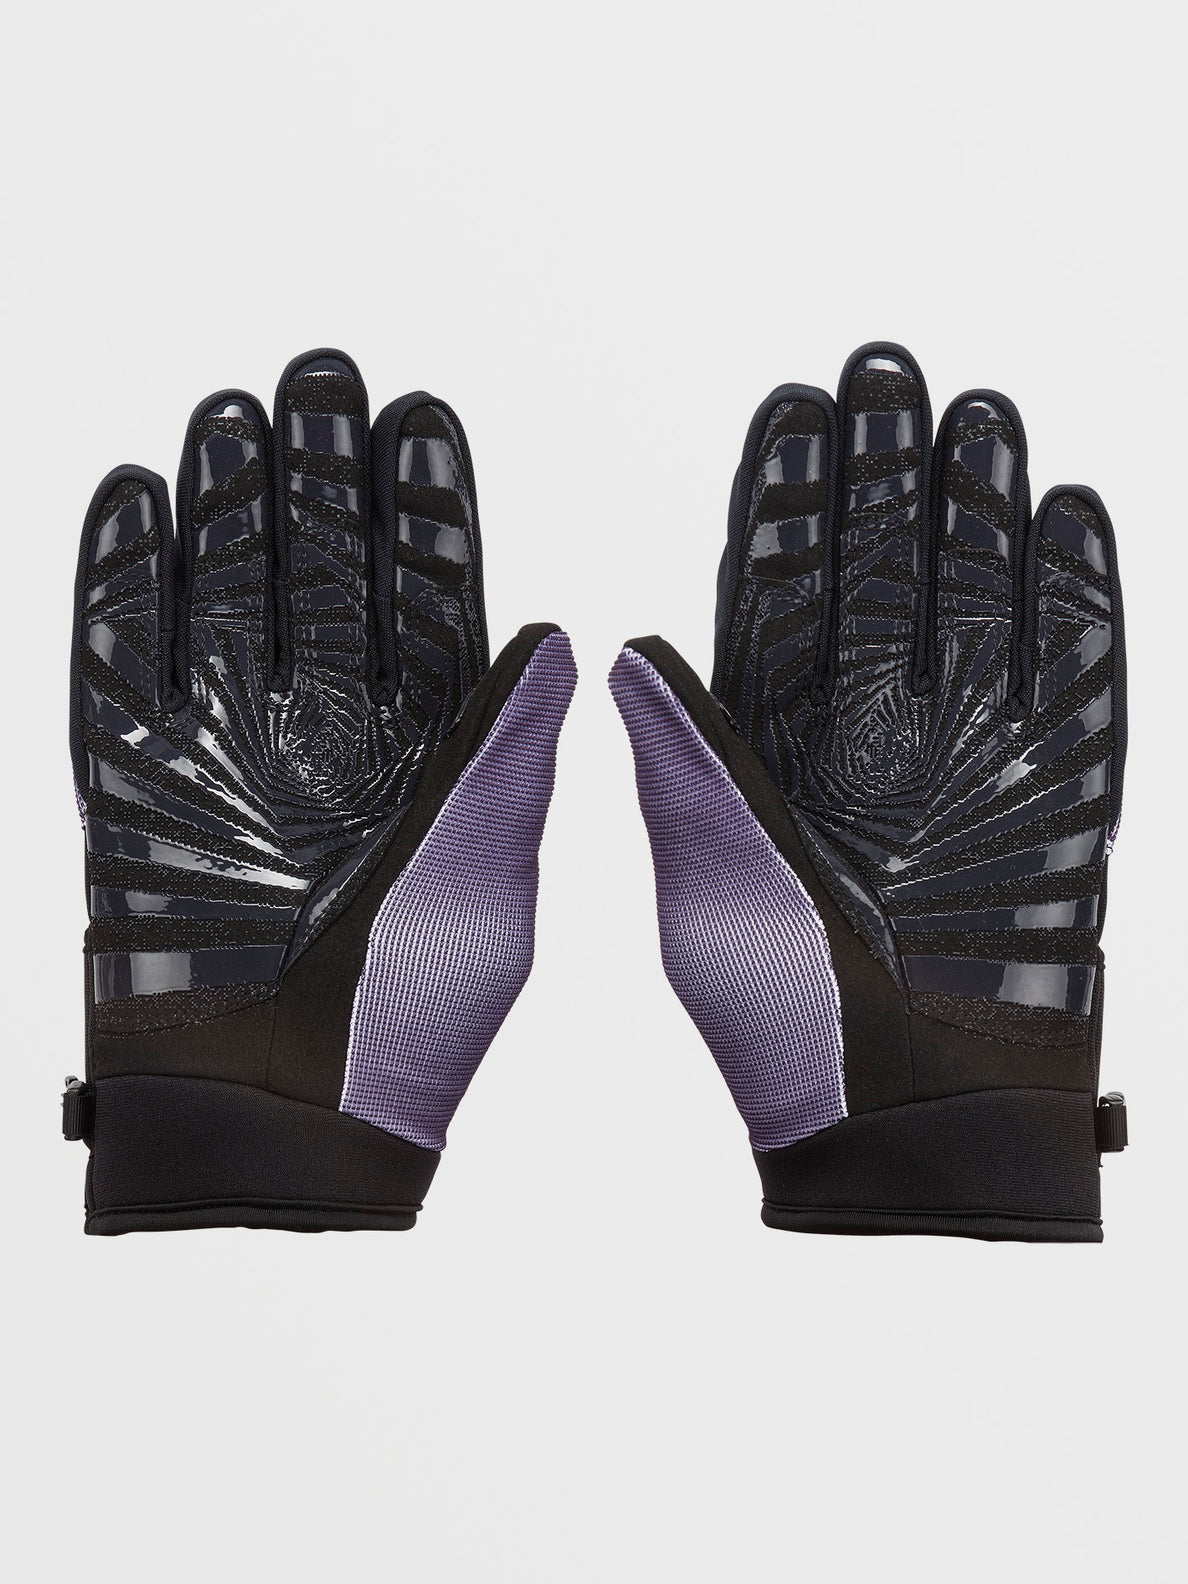 Crail Glove Purple (J6852407_PUR) [B]